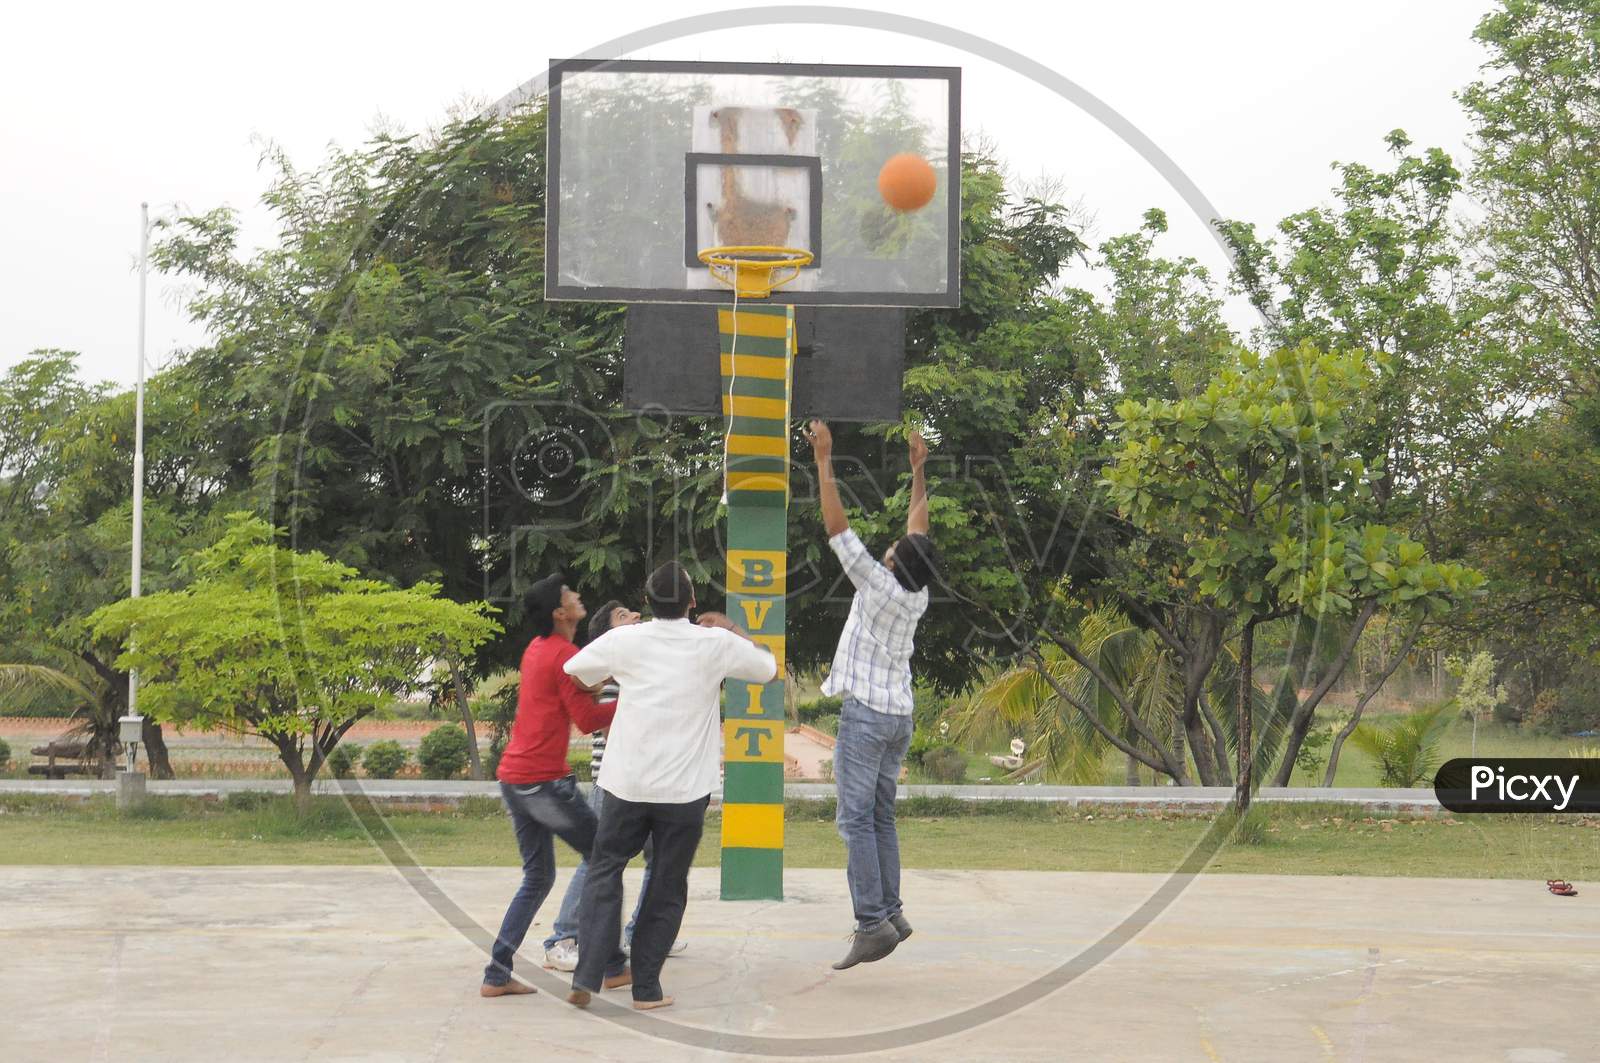 Group of men playing basketball